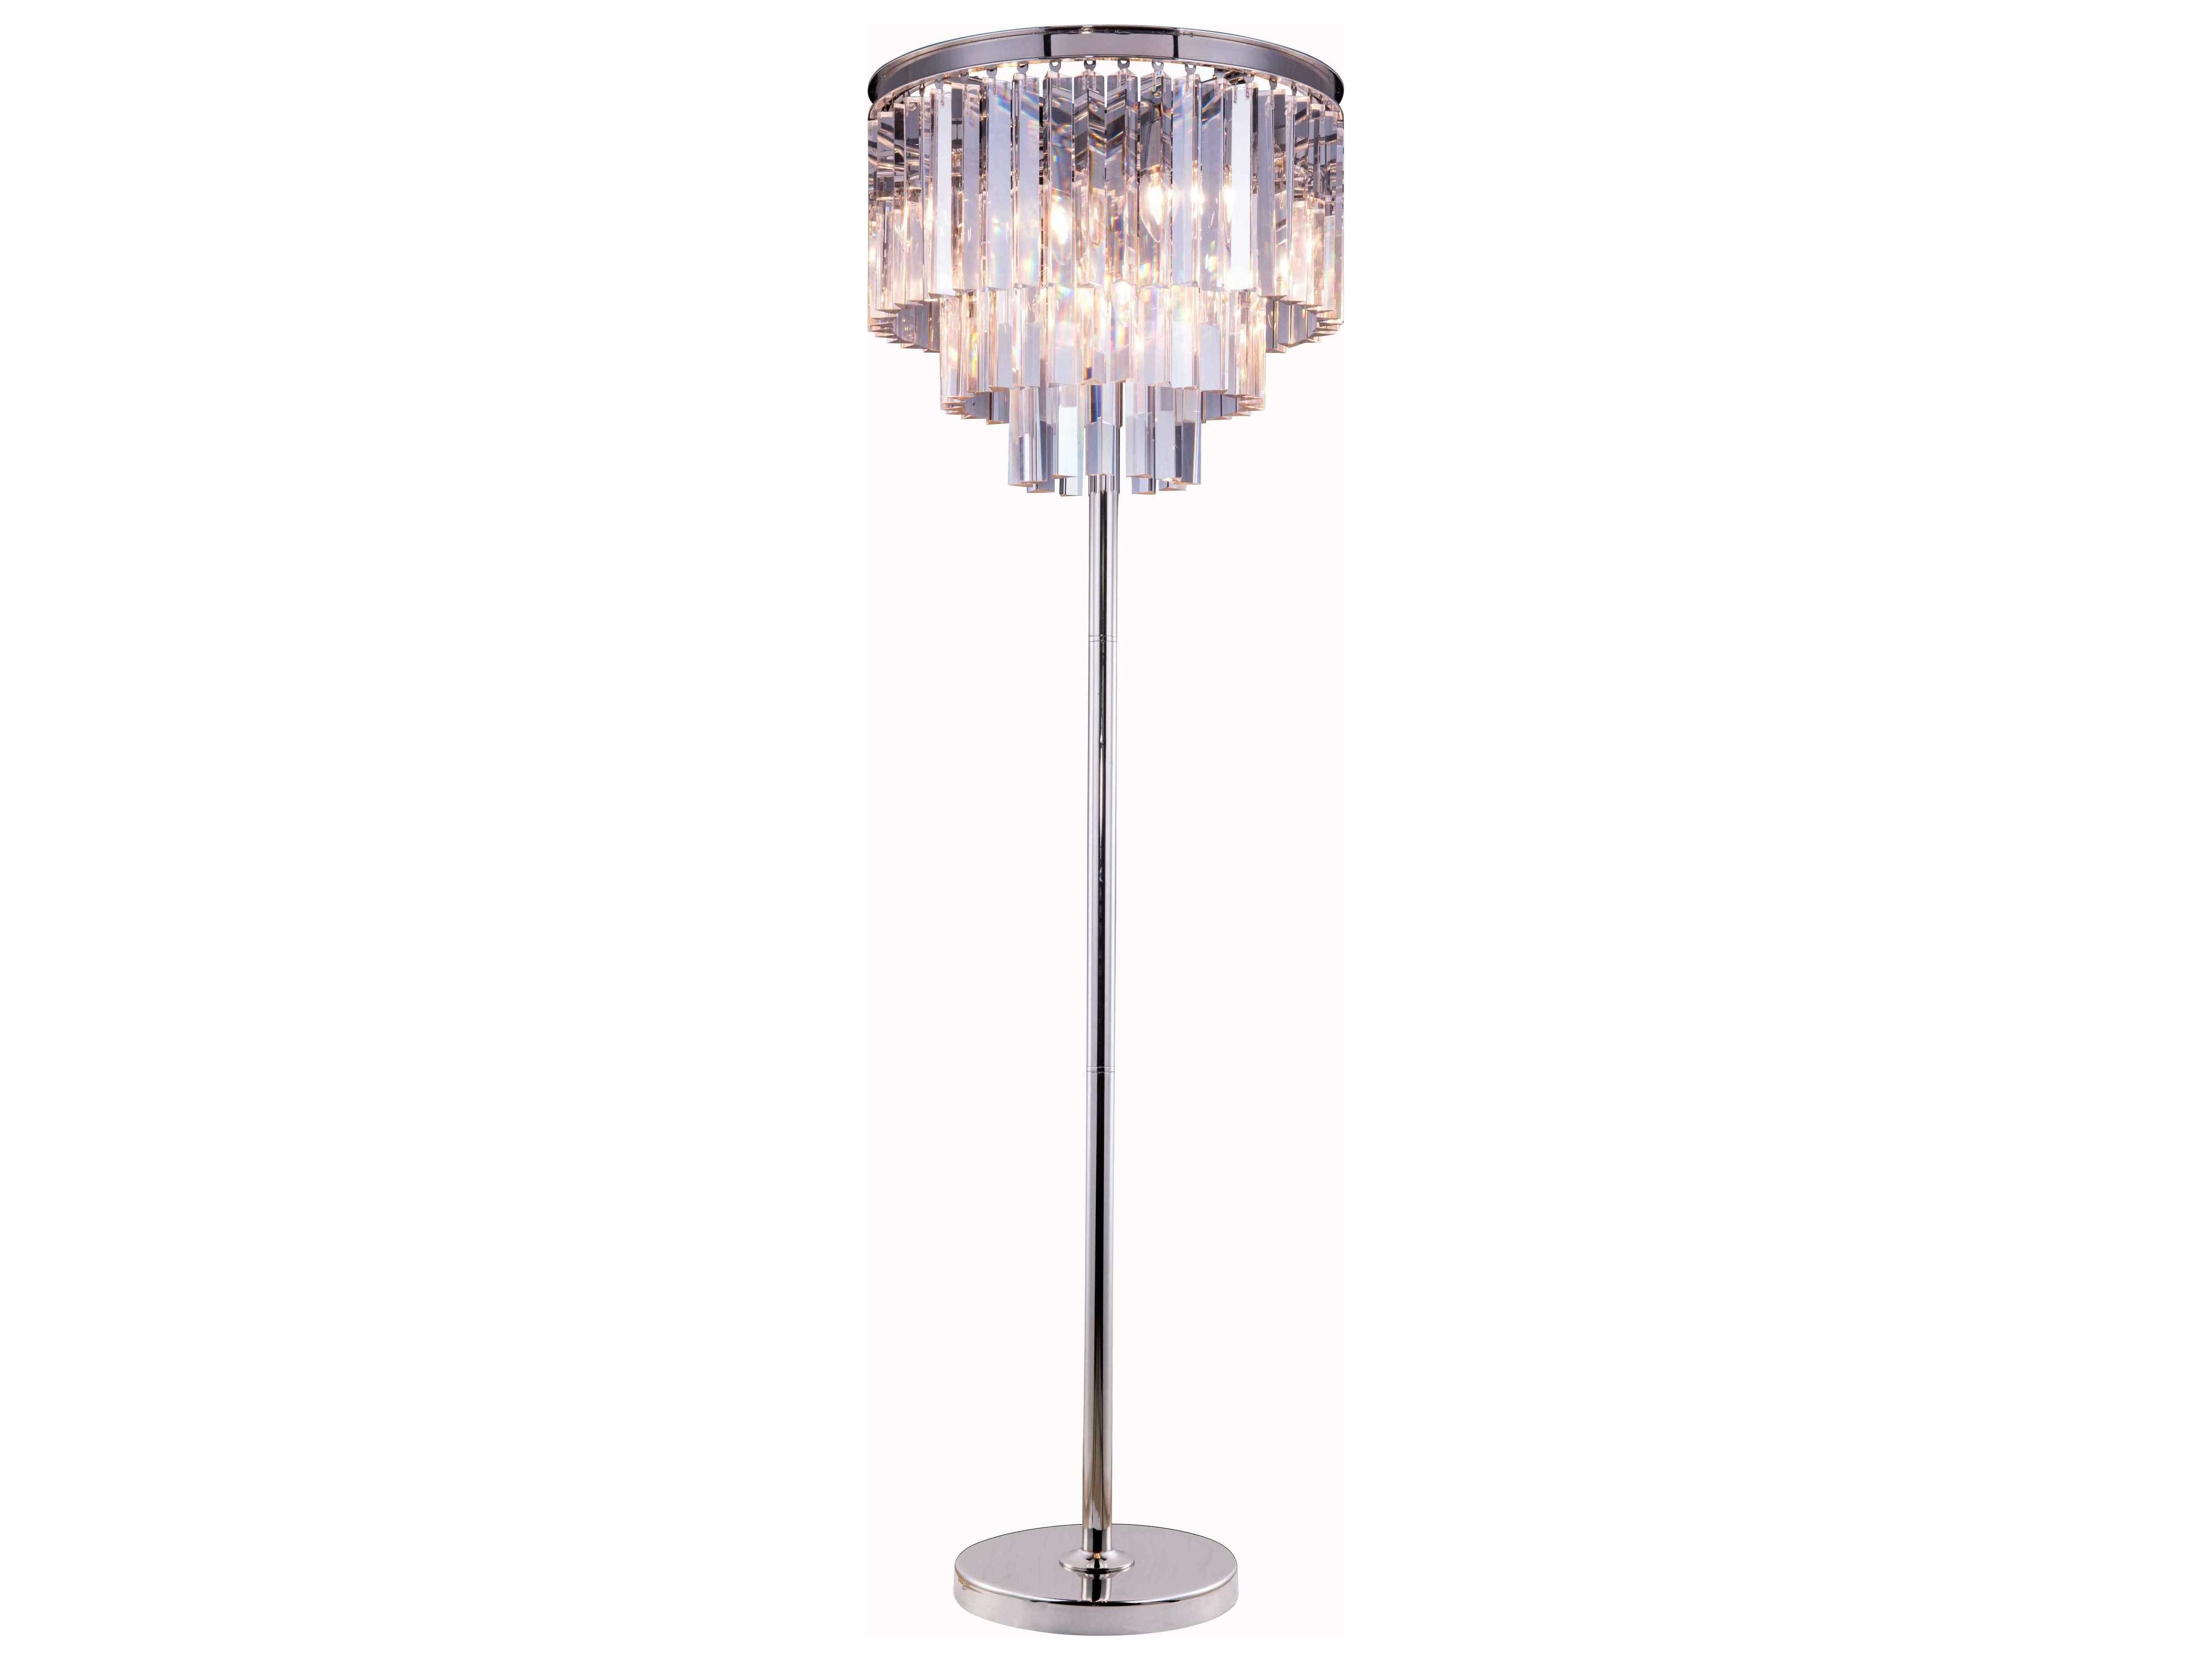 Elegant Lighting Urban Royal Cut Polished Nickel Crystal Eight Light Floor Lamp with regard to dimensions 5109 X 3833